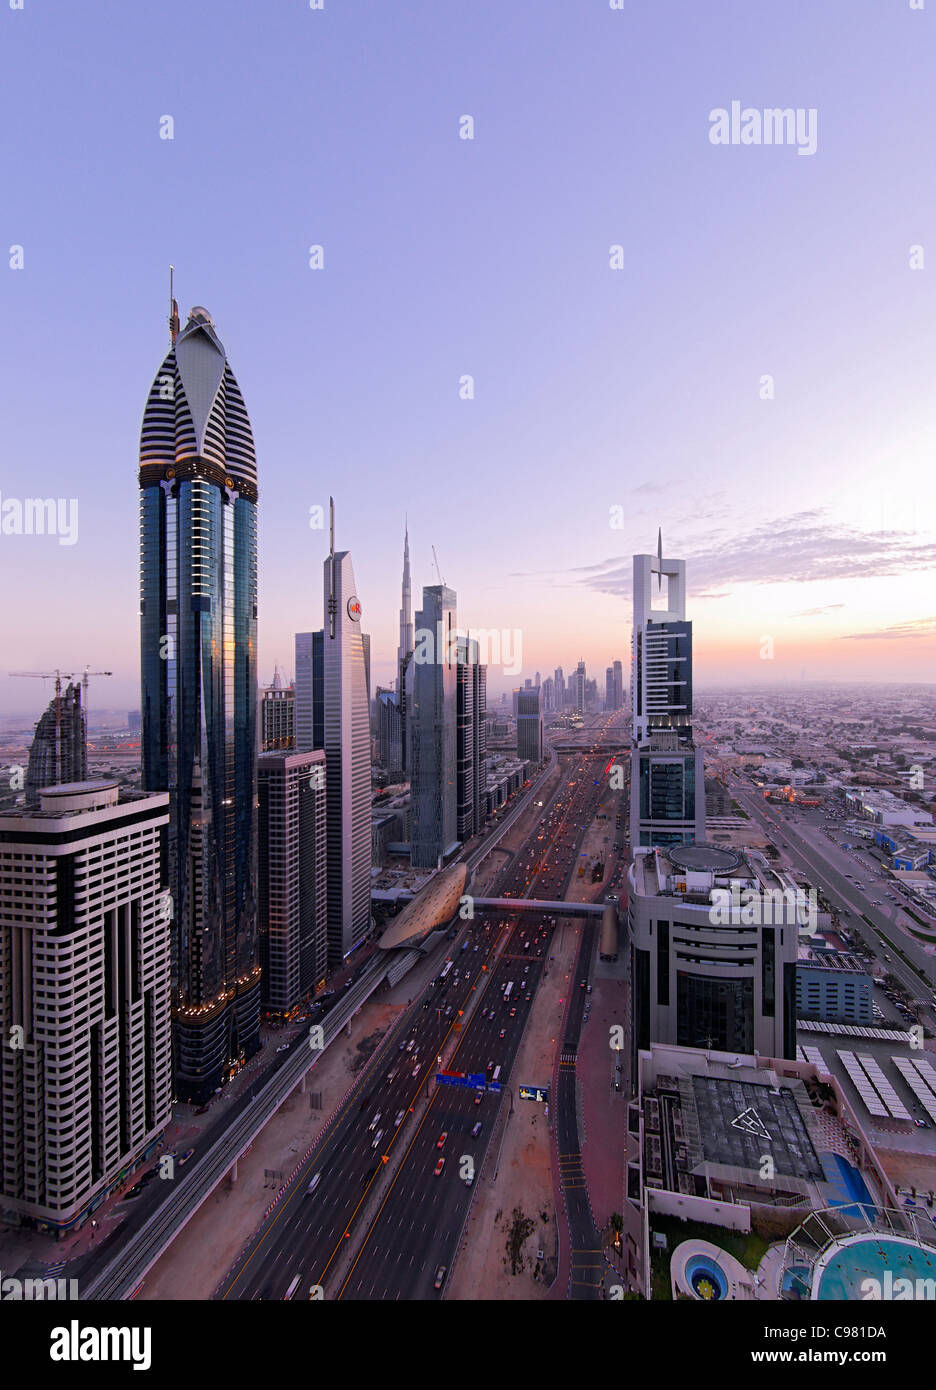 Blick auf Downtown Dubai, Türme, Hochhäuser, Hotels, moderne Architektur, Financial District, Sheikh Zayed Road, Dubai Stockfoto